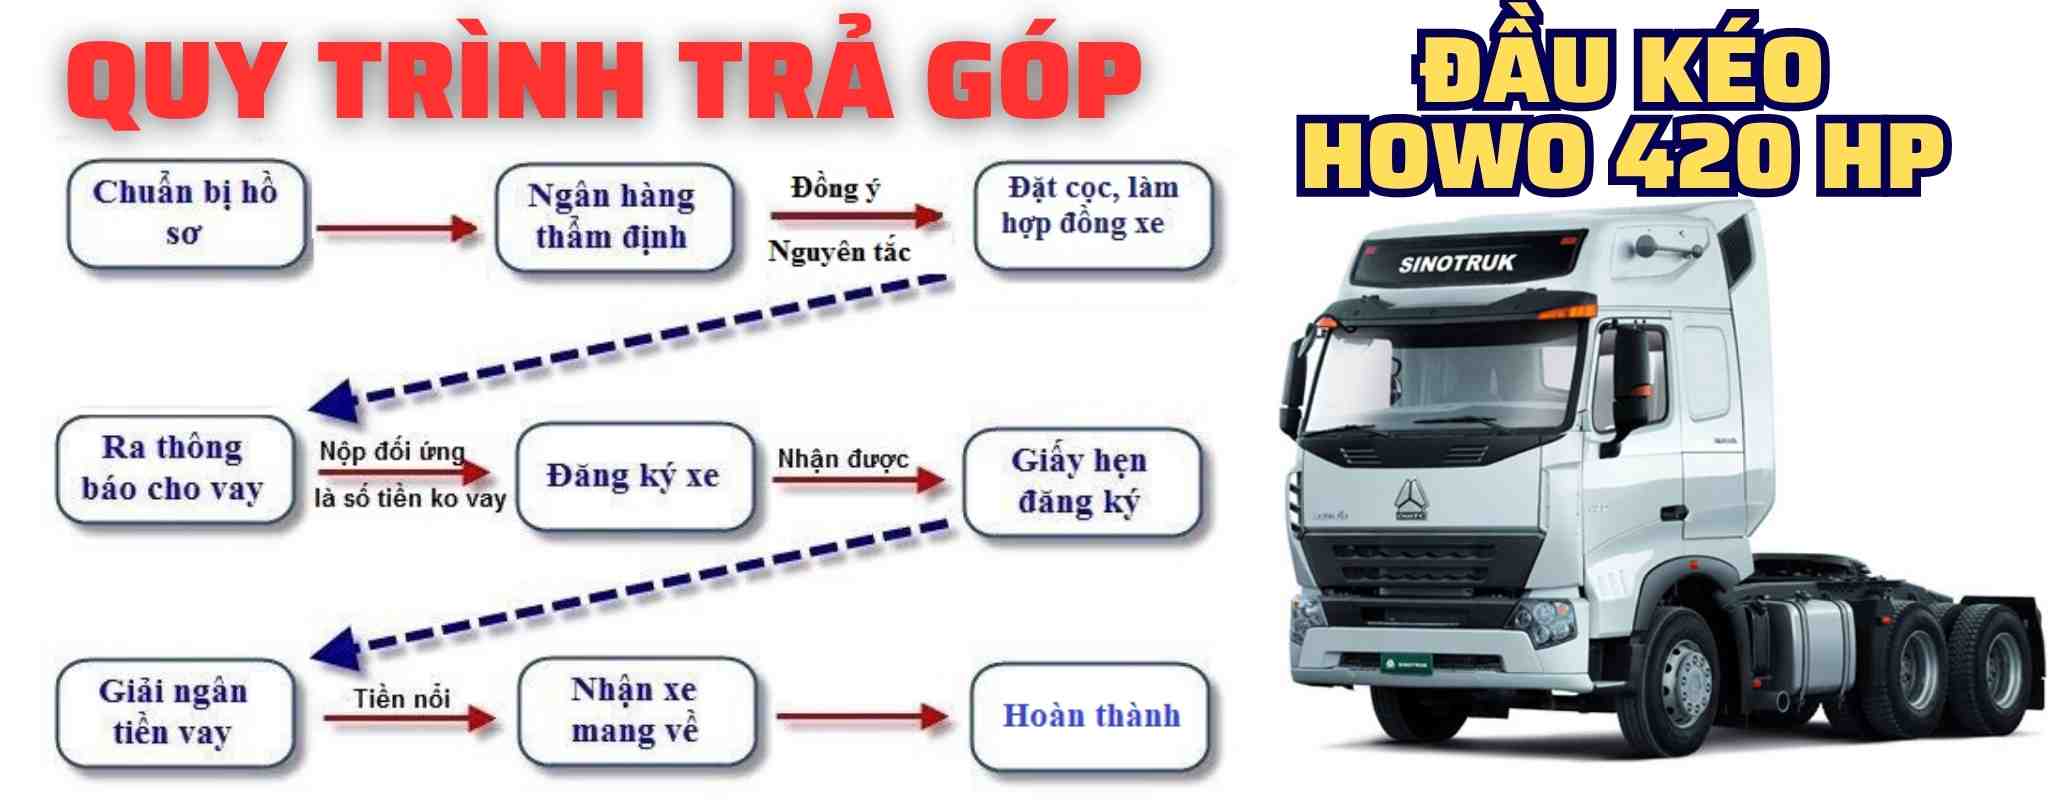 quy-trinh-tra-gop-dau-keo-howo-420-hp